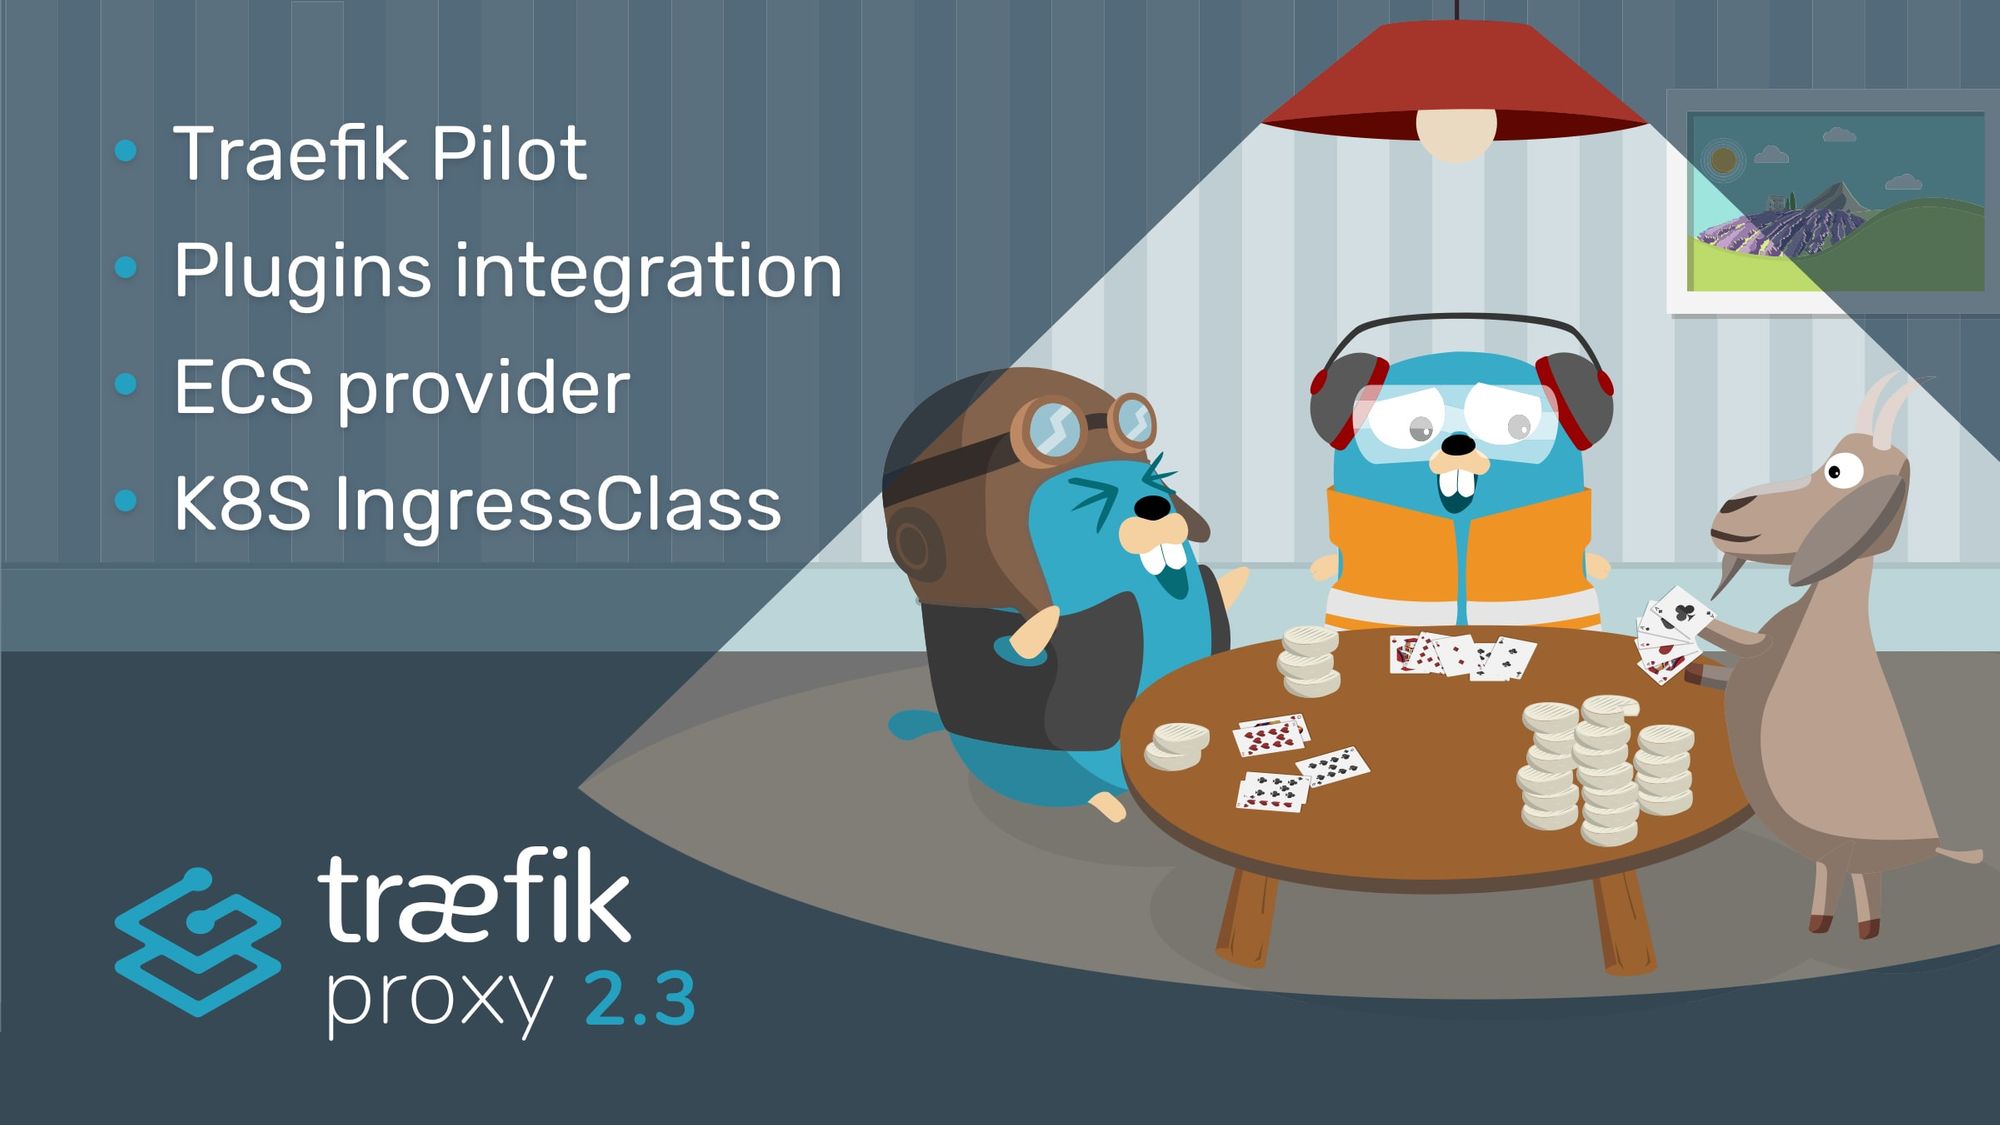 Traefik 2.3 features integration with Traefik Pilot, Middleware Plugins, ECS provider, and support for K8S IngressClass